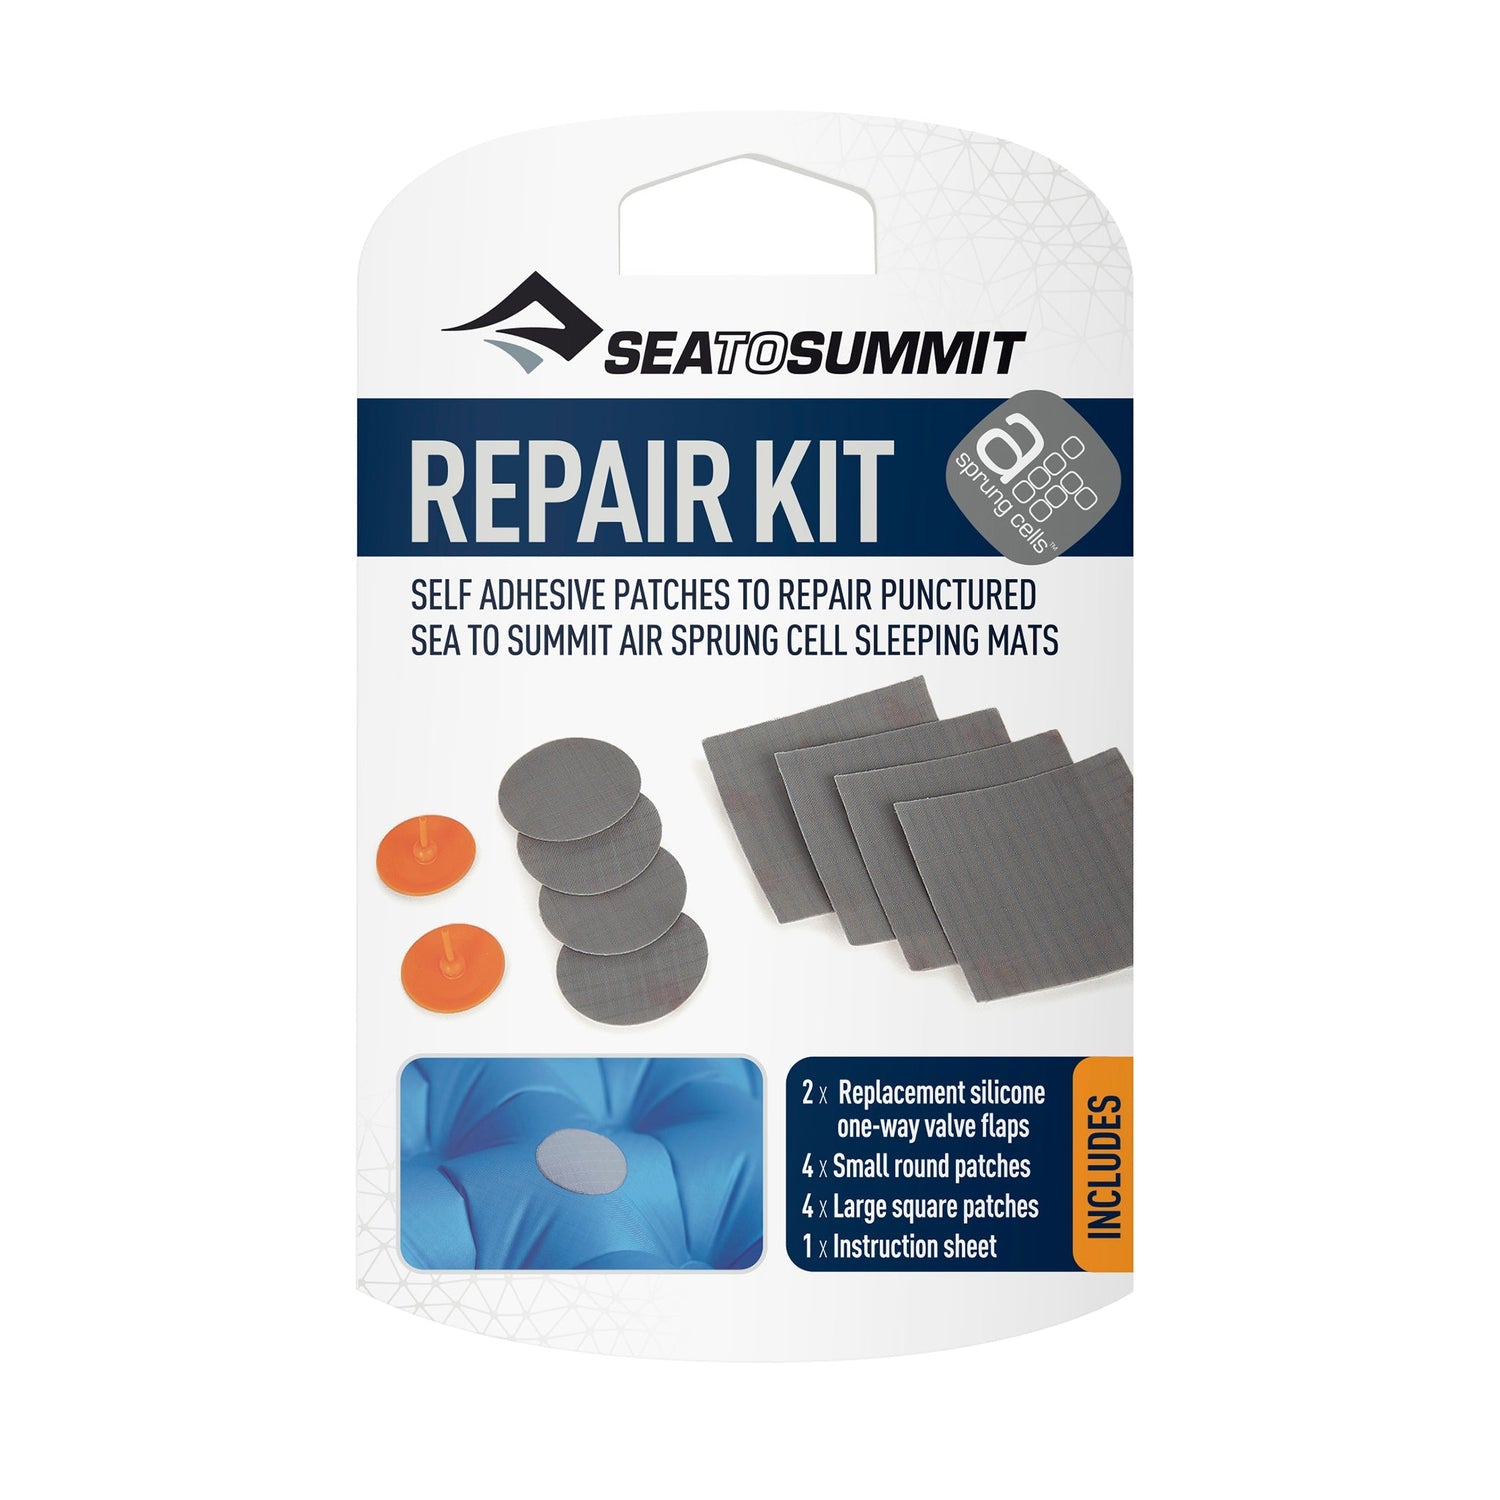 Sea to Summit sleeping mat repair kit.